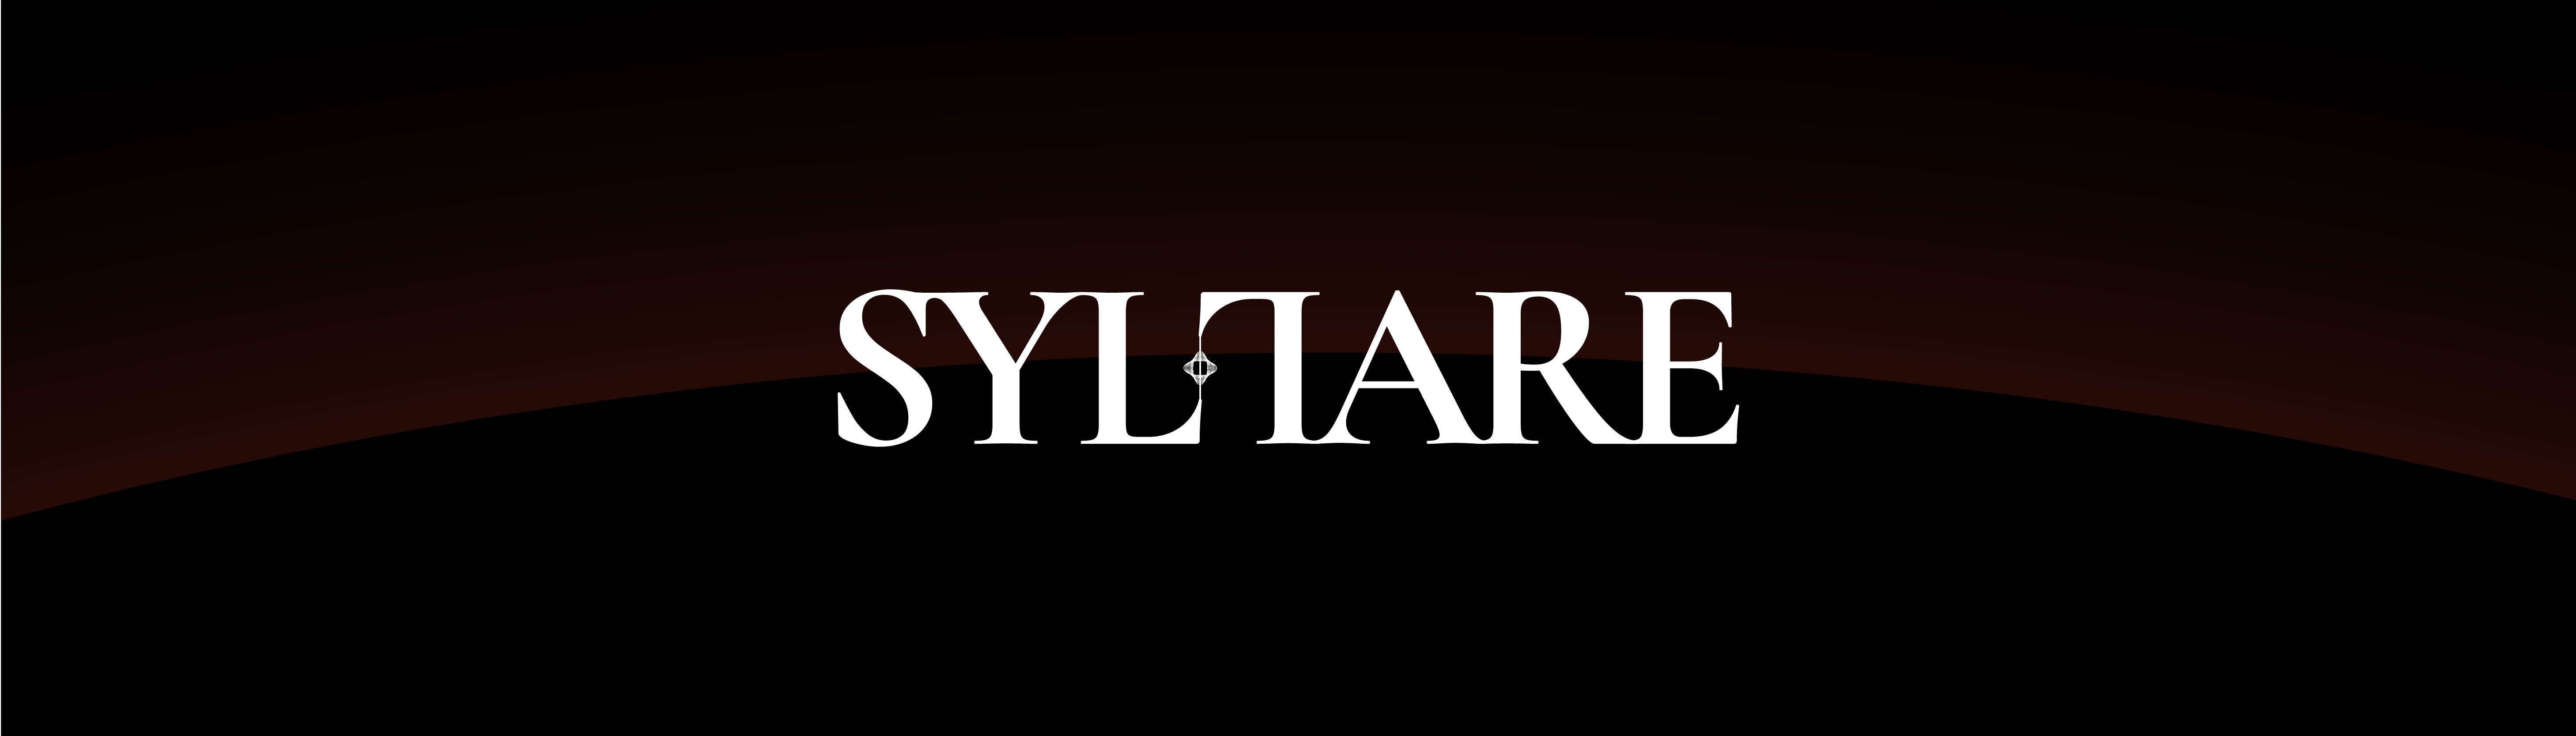 syltare-official banner